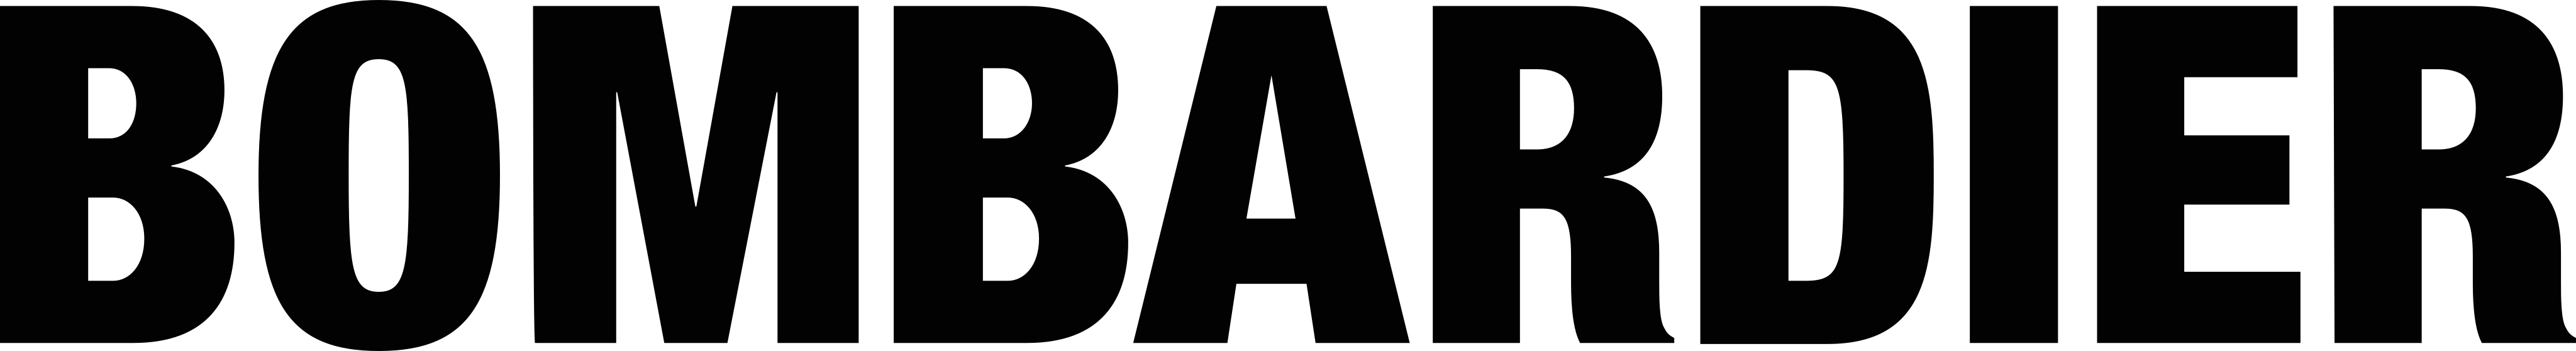 bombardier logo 8 - Bombardier Logo